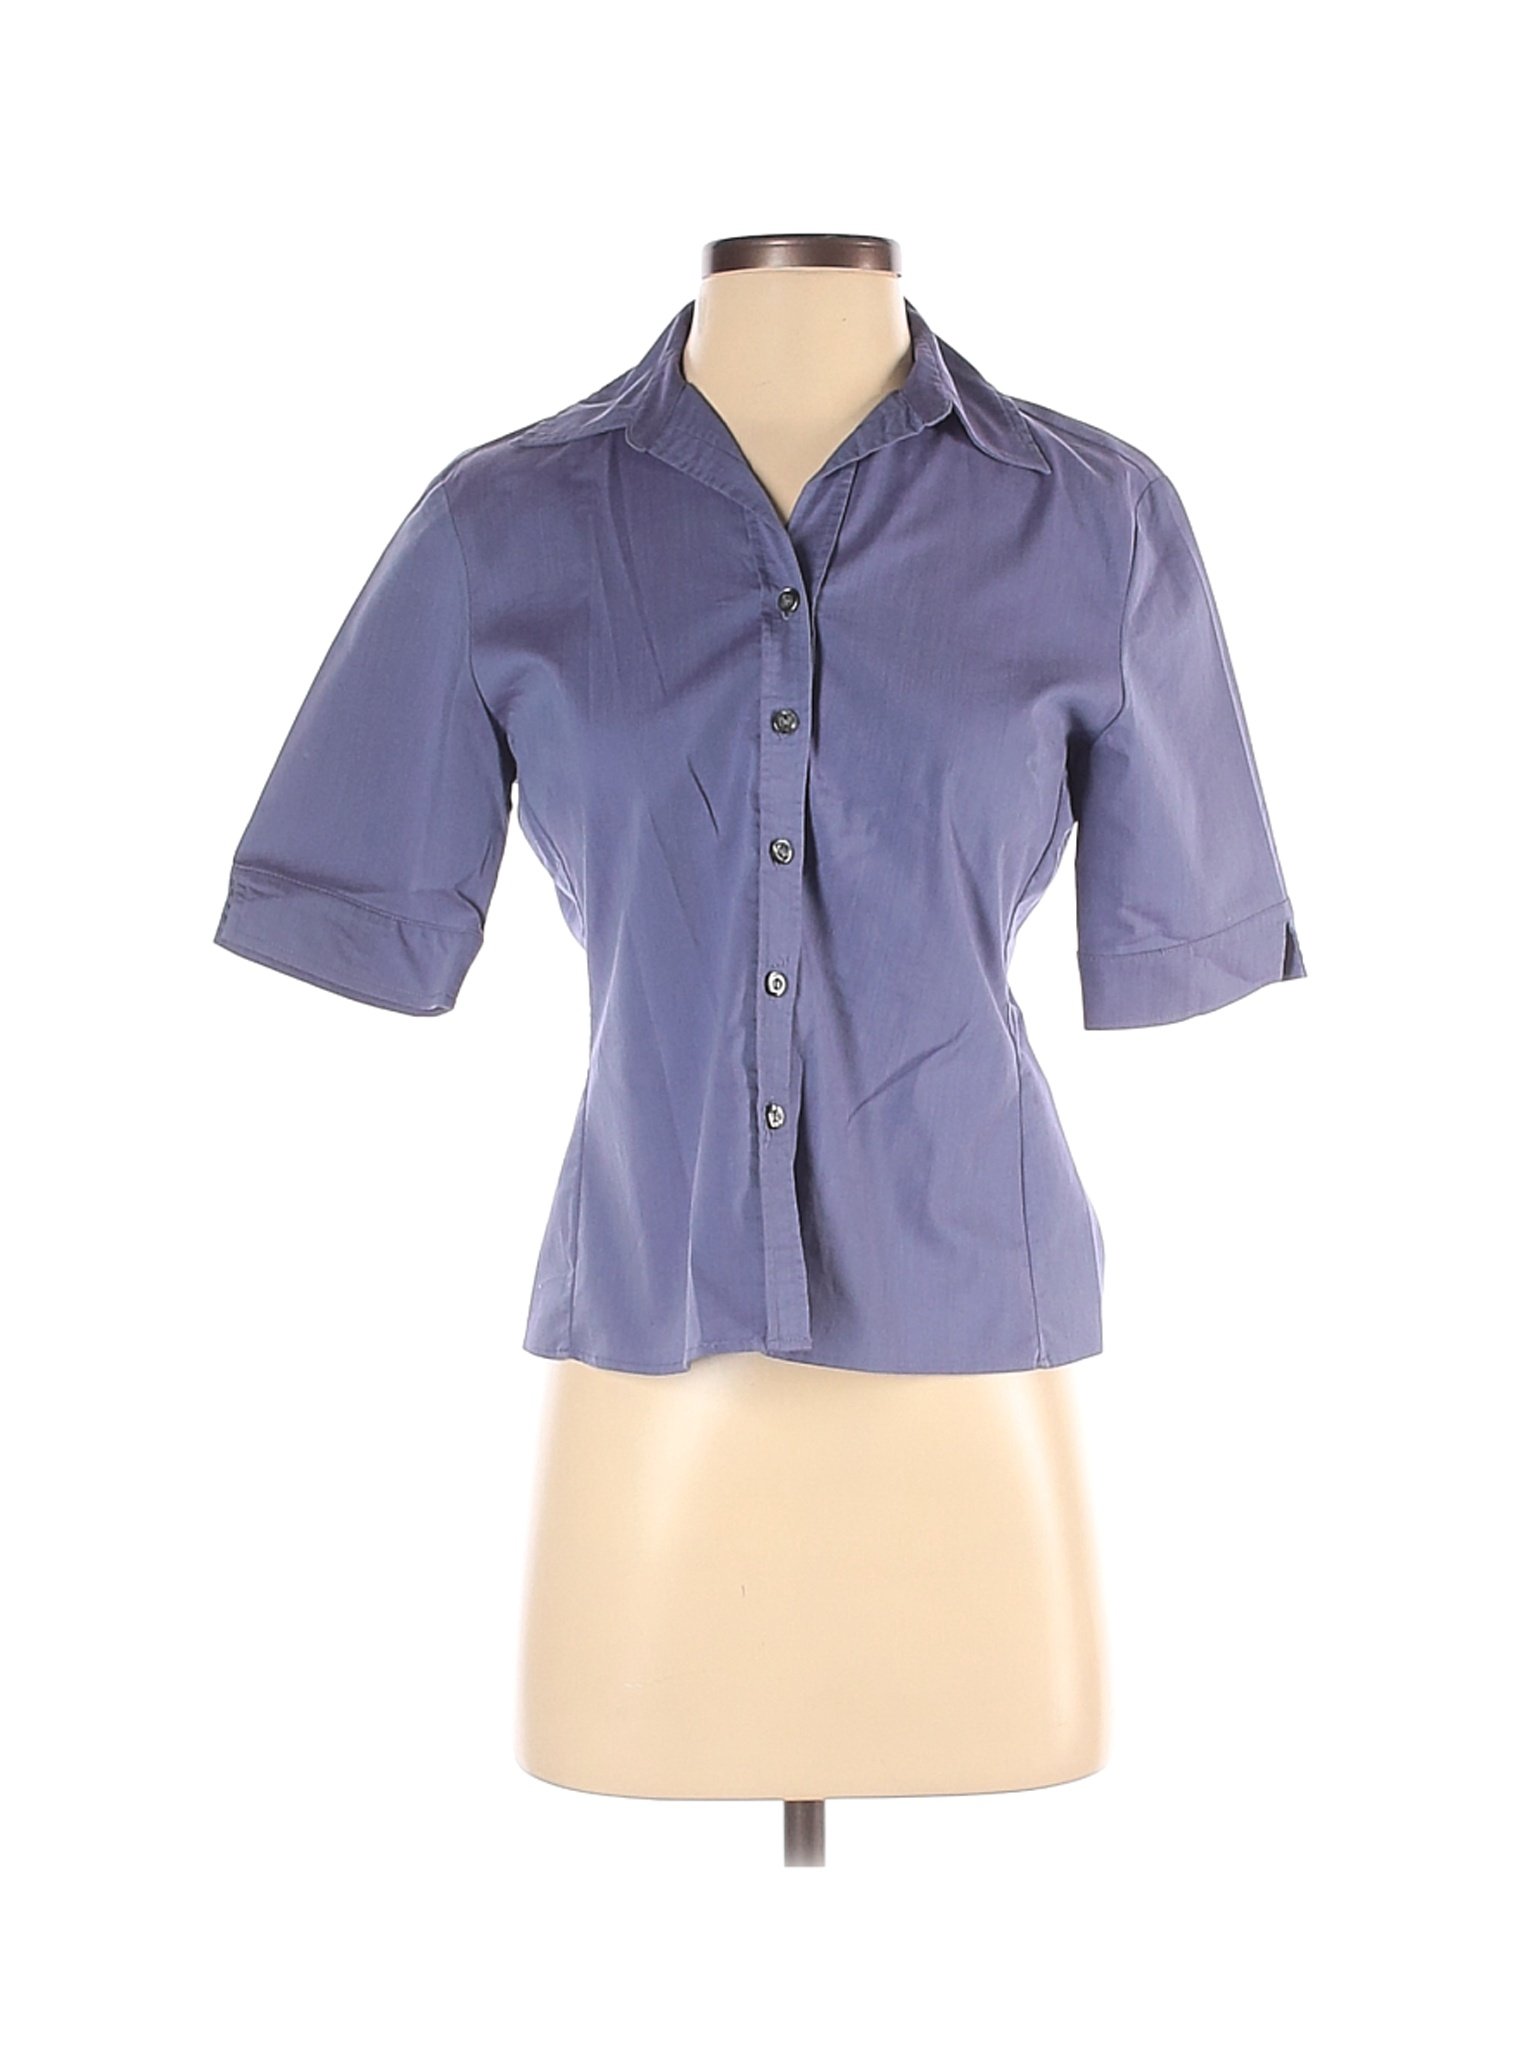 New York & Company Women Purple Short Sleeve Button-Down Shirt S | eBay